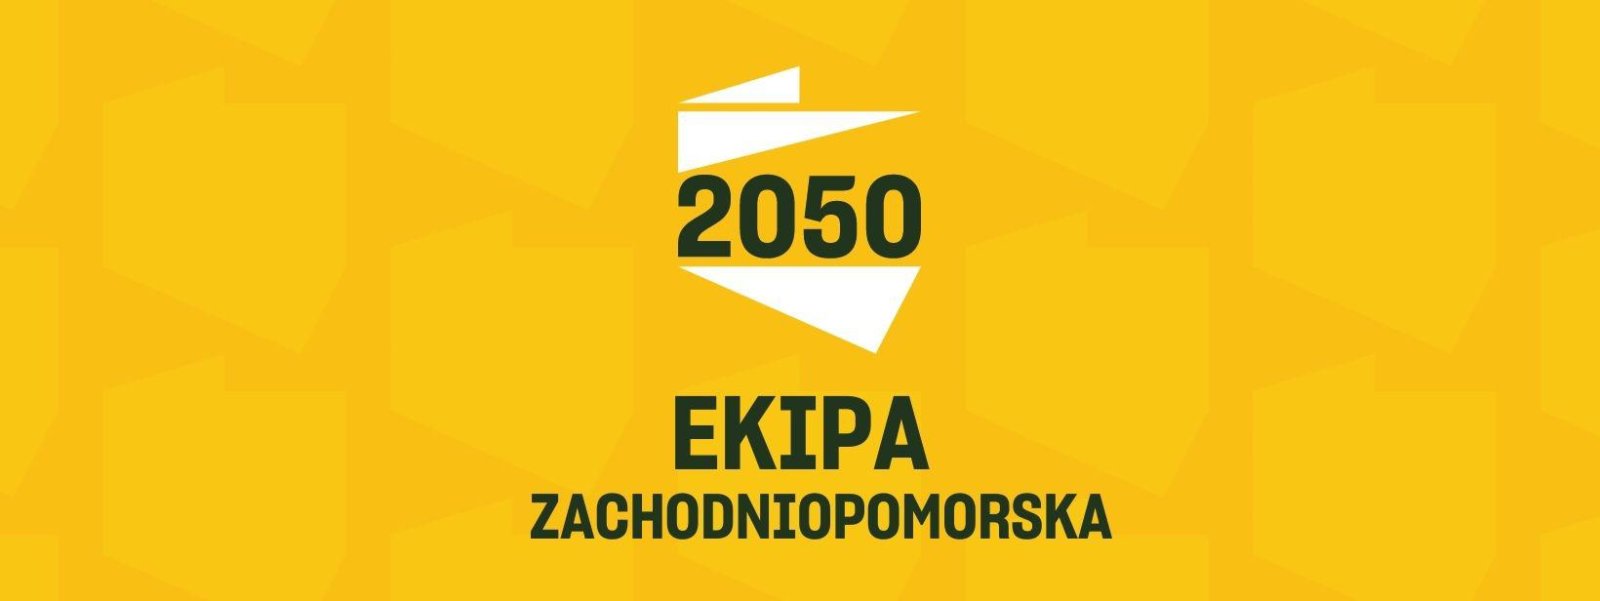 2050 Hołownia logo